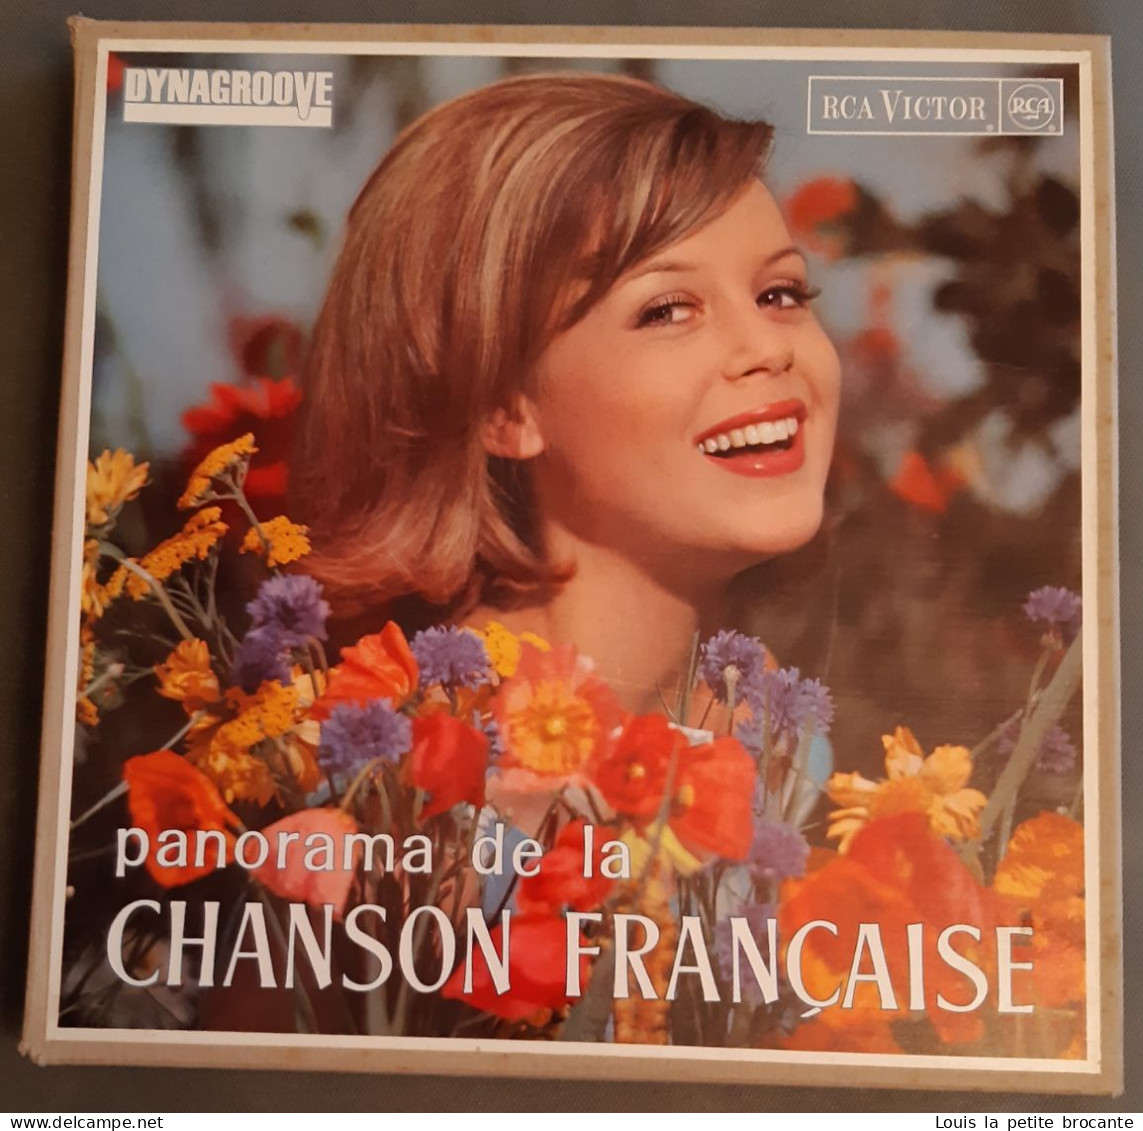 Coffret De 10 Disques Vinyles, PANORAMA DE LA CHANSON FRANCAISE - DINAGROOVE - RCA VICTOR 1964, 1 Chanson Rayée - Colecciones Completas